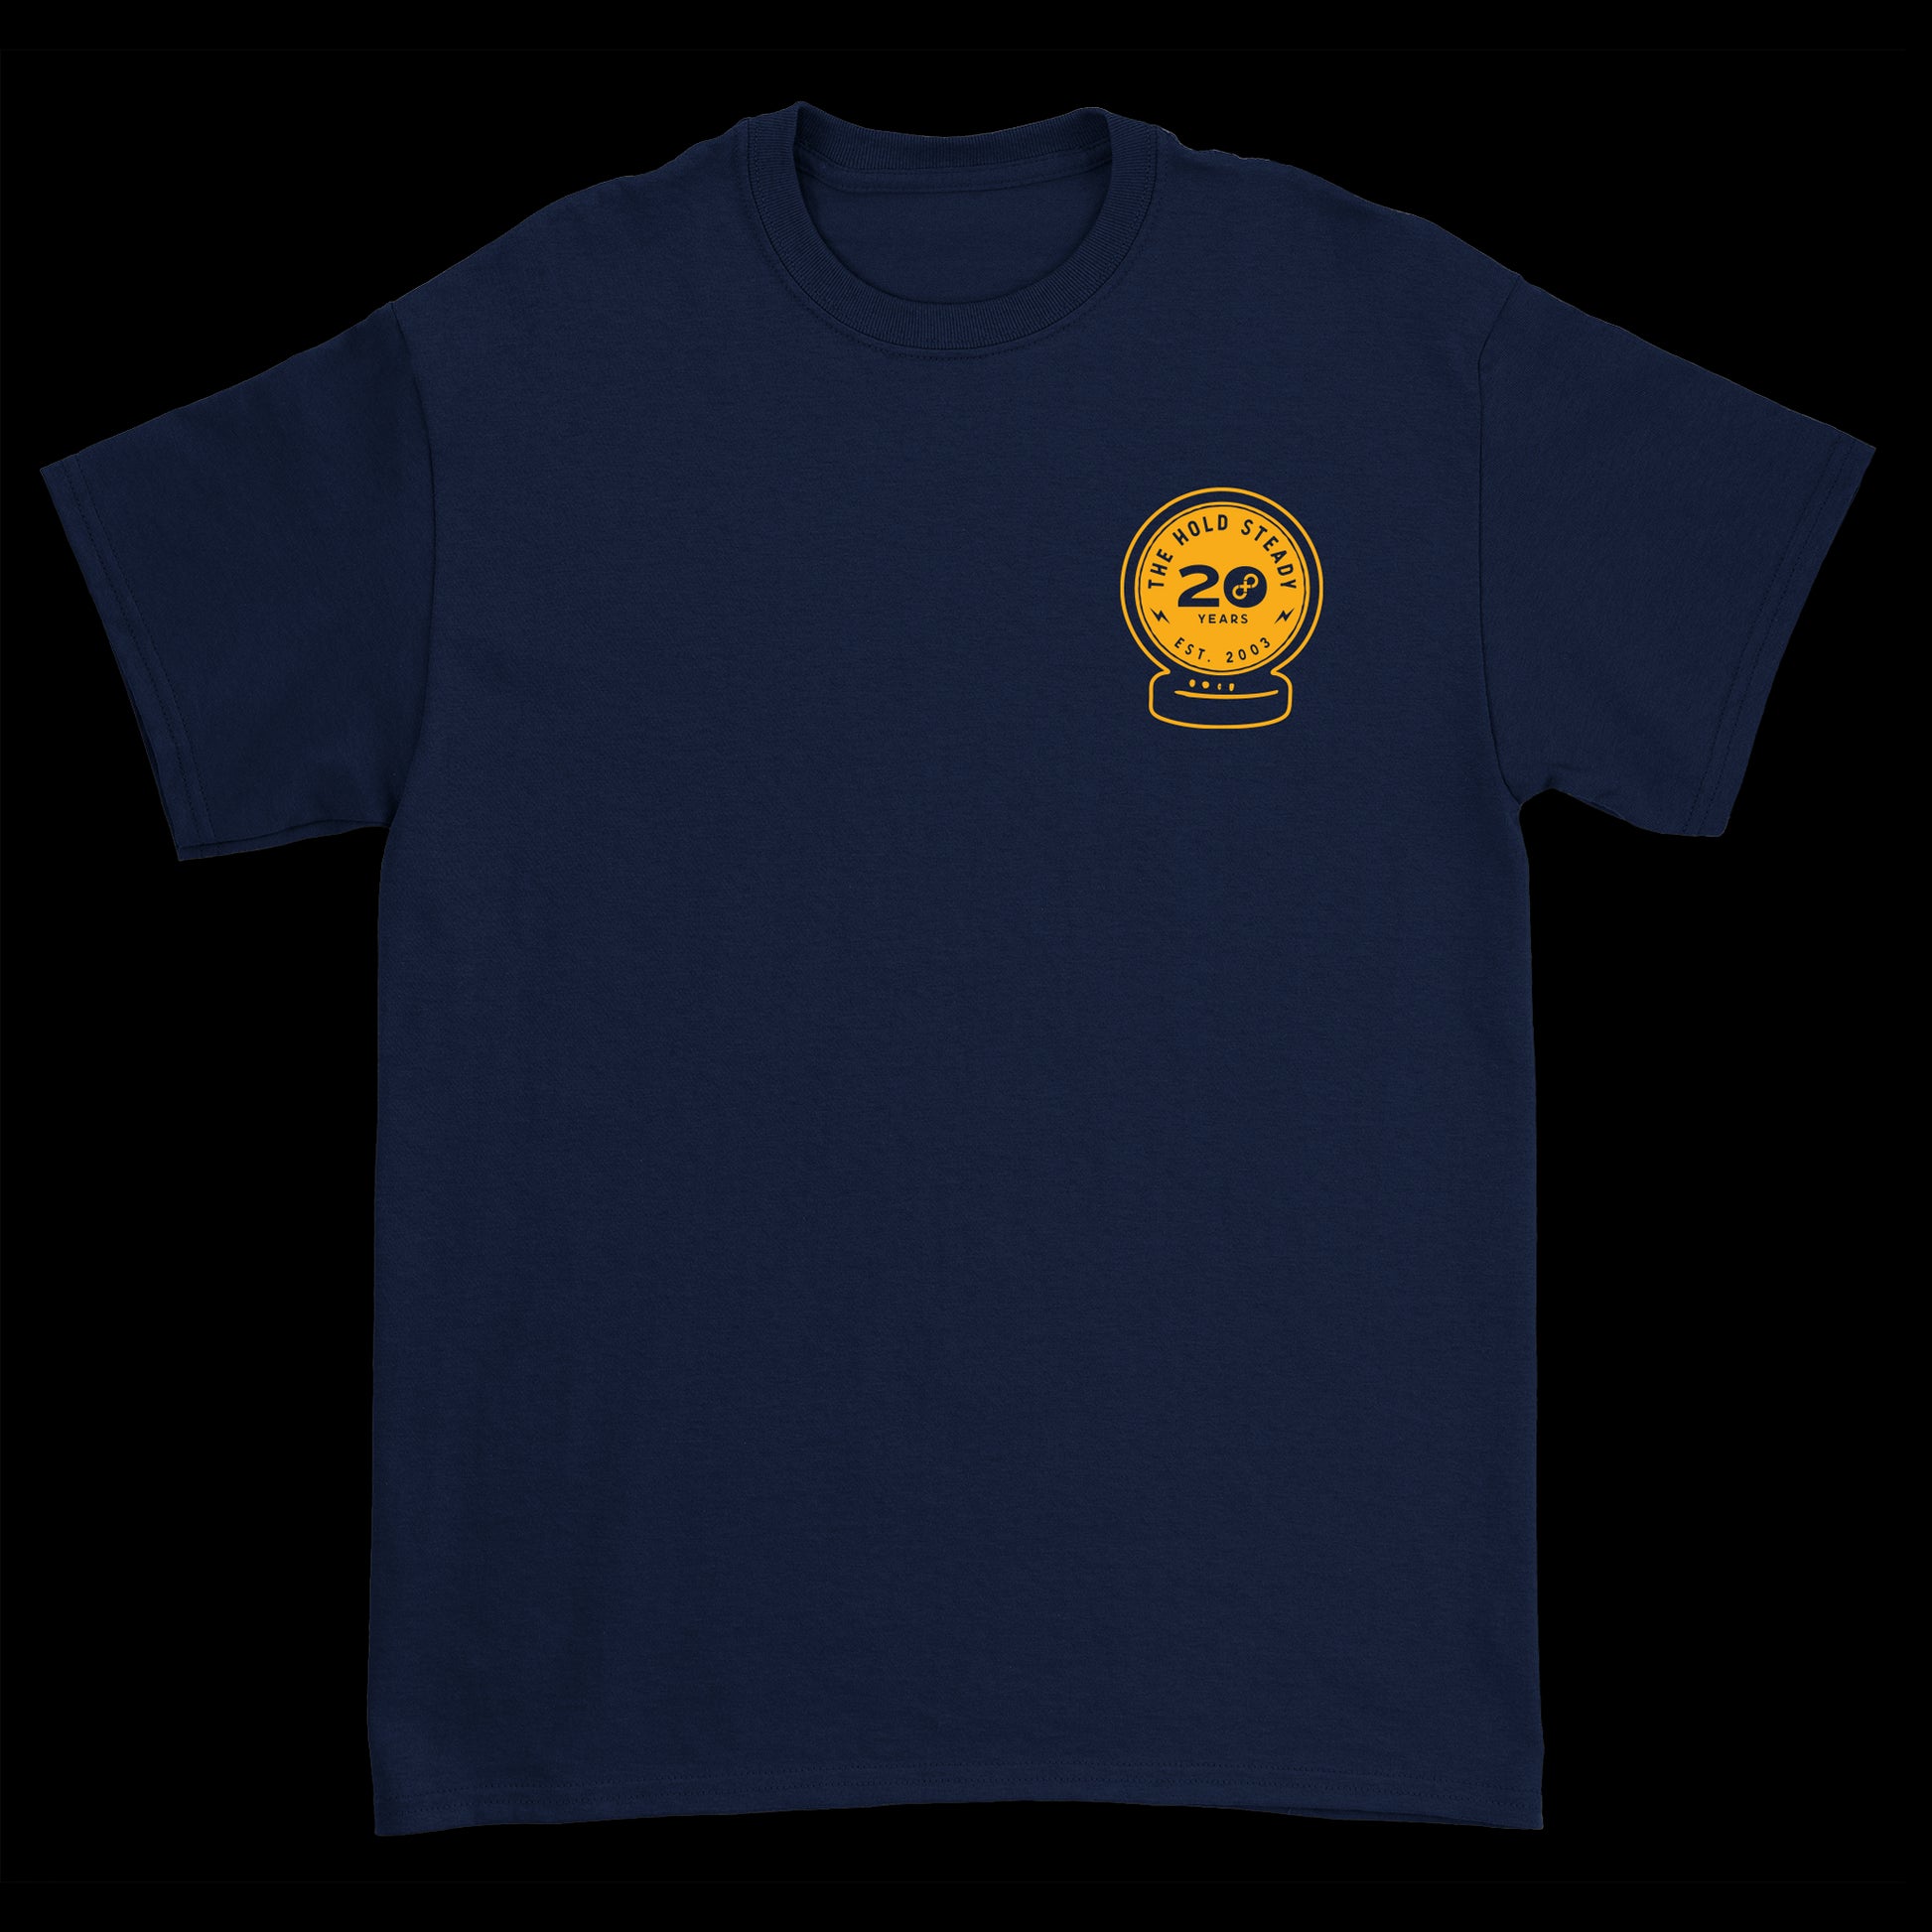 Crystal Ball Navy T-Shirt front